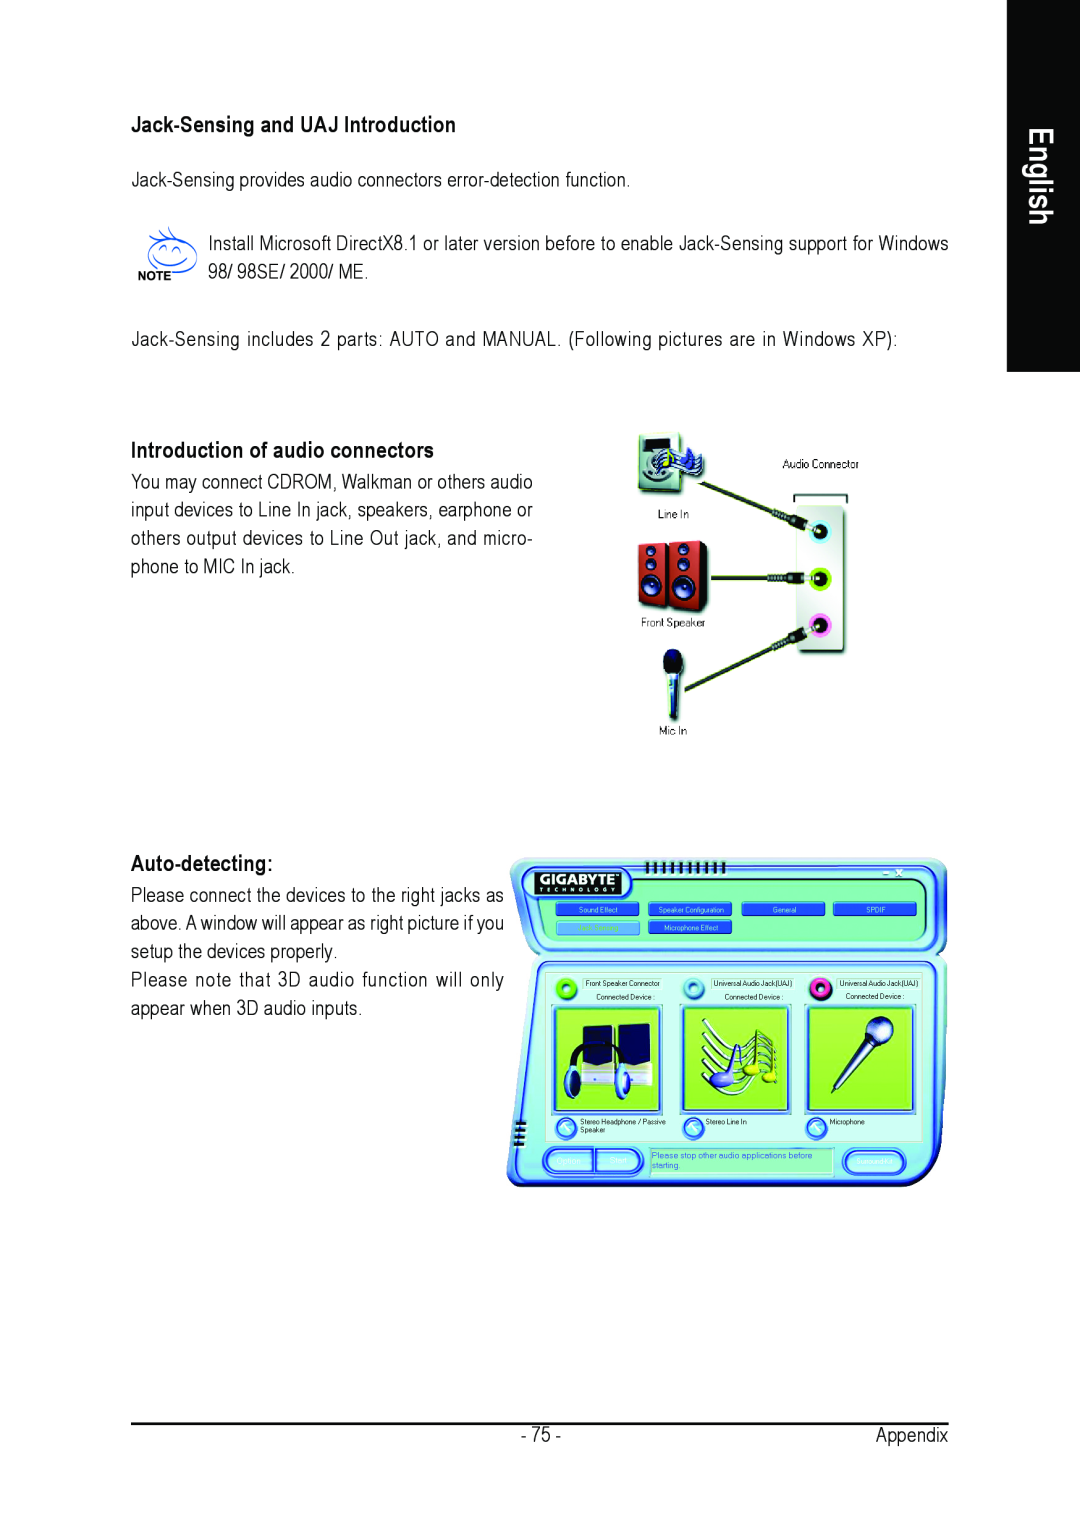 AMD GA-K8NSC-939 user manual Jack-Sensing and UAJ Introduction, Introduction of audio connectors, Auto-detecting, English 